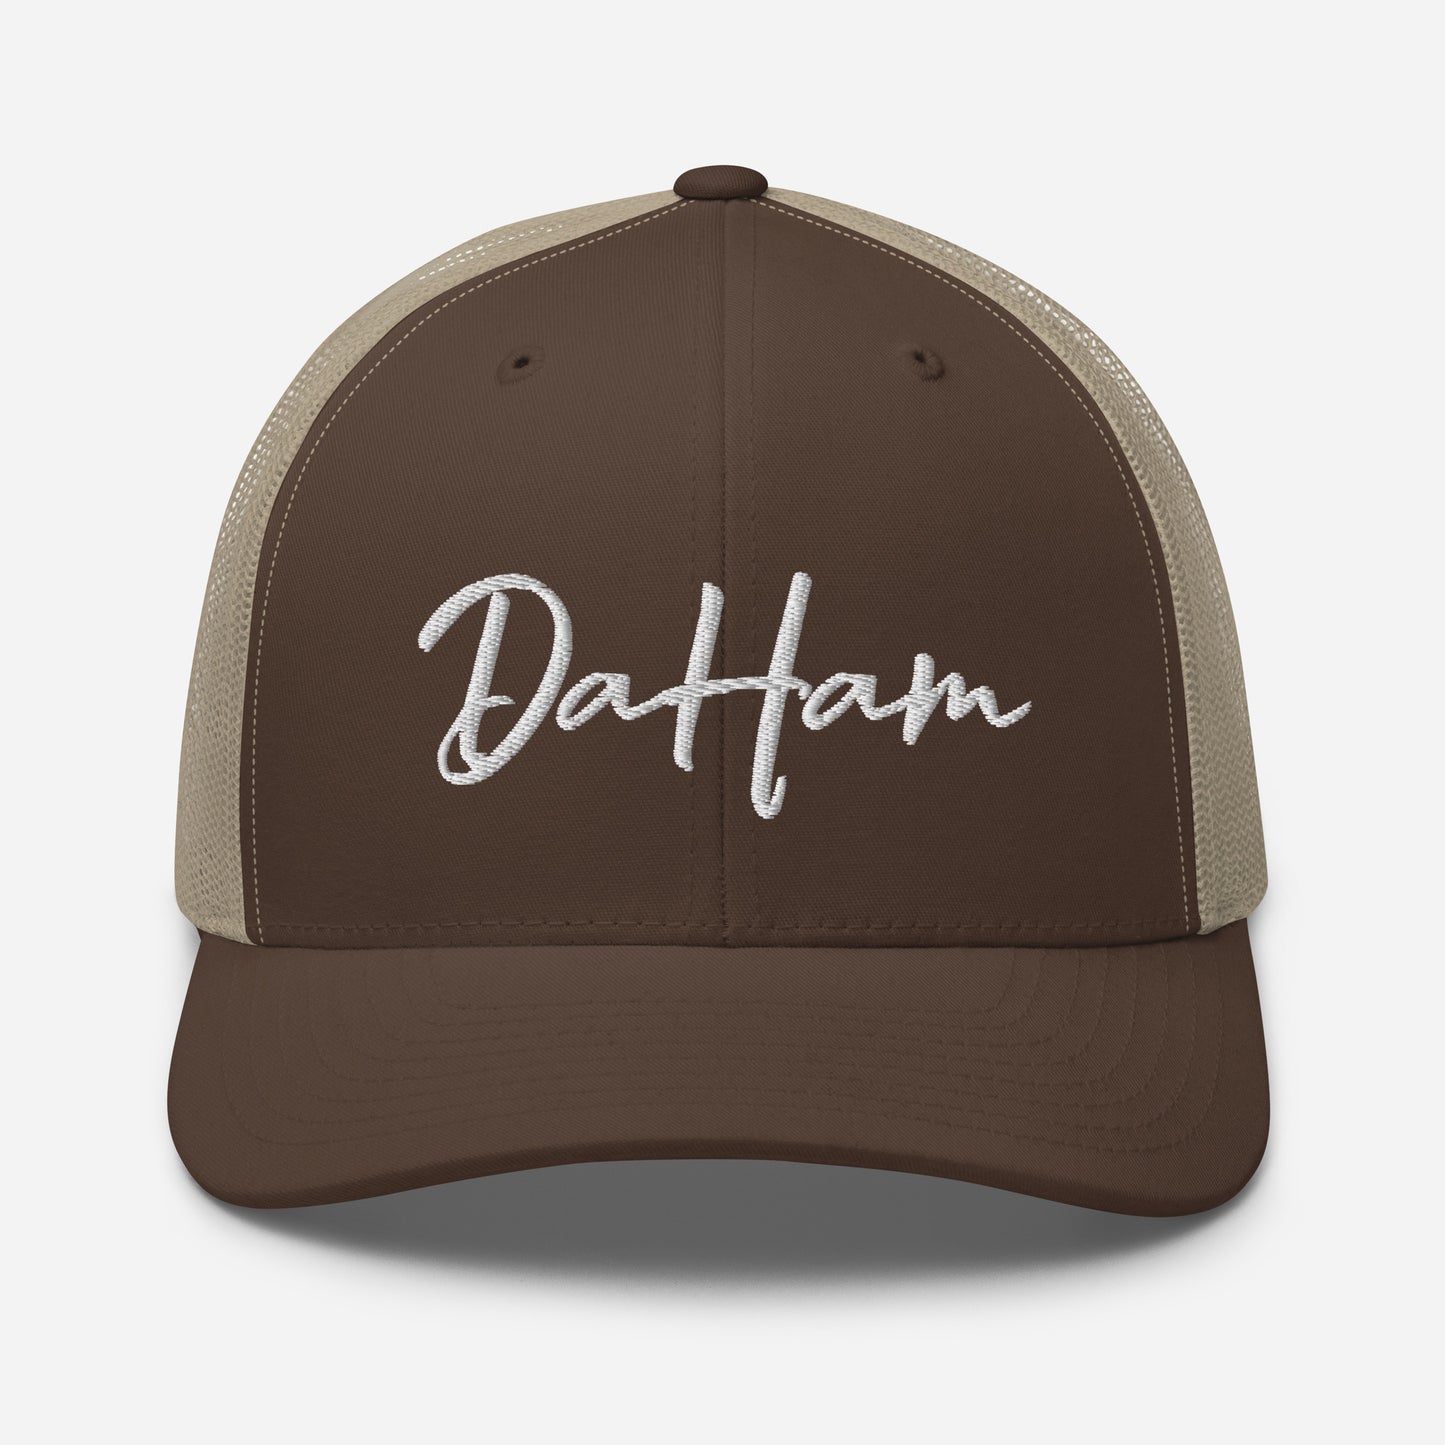 DaHam (Birmingham) Trucker Cap